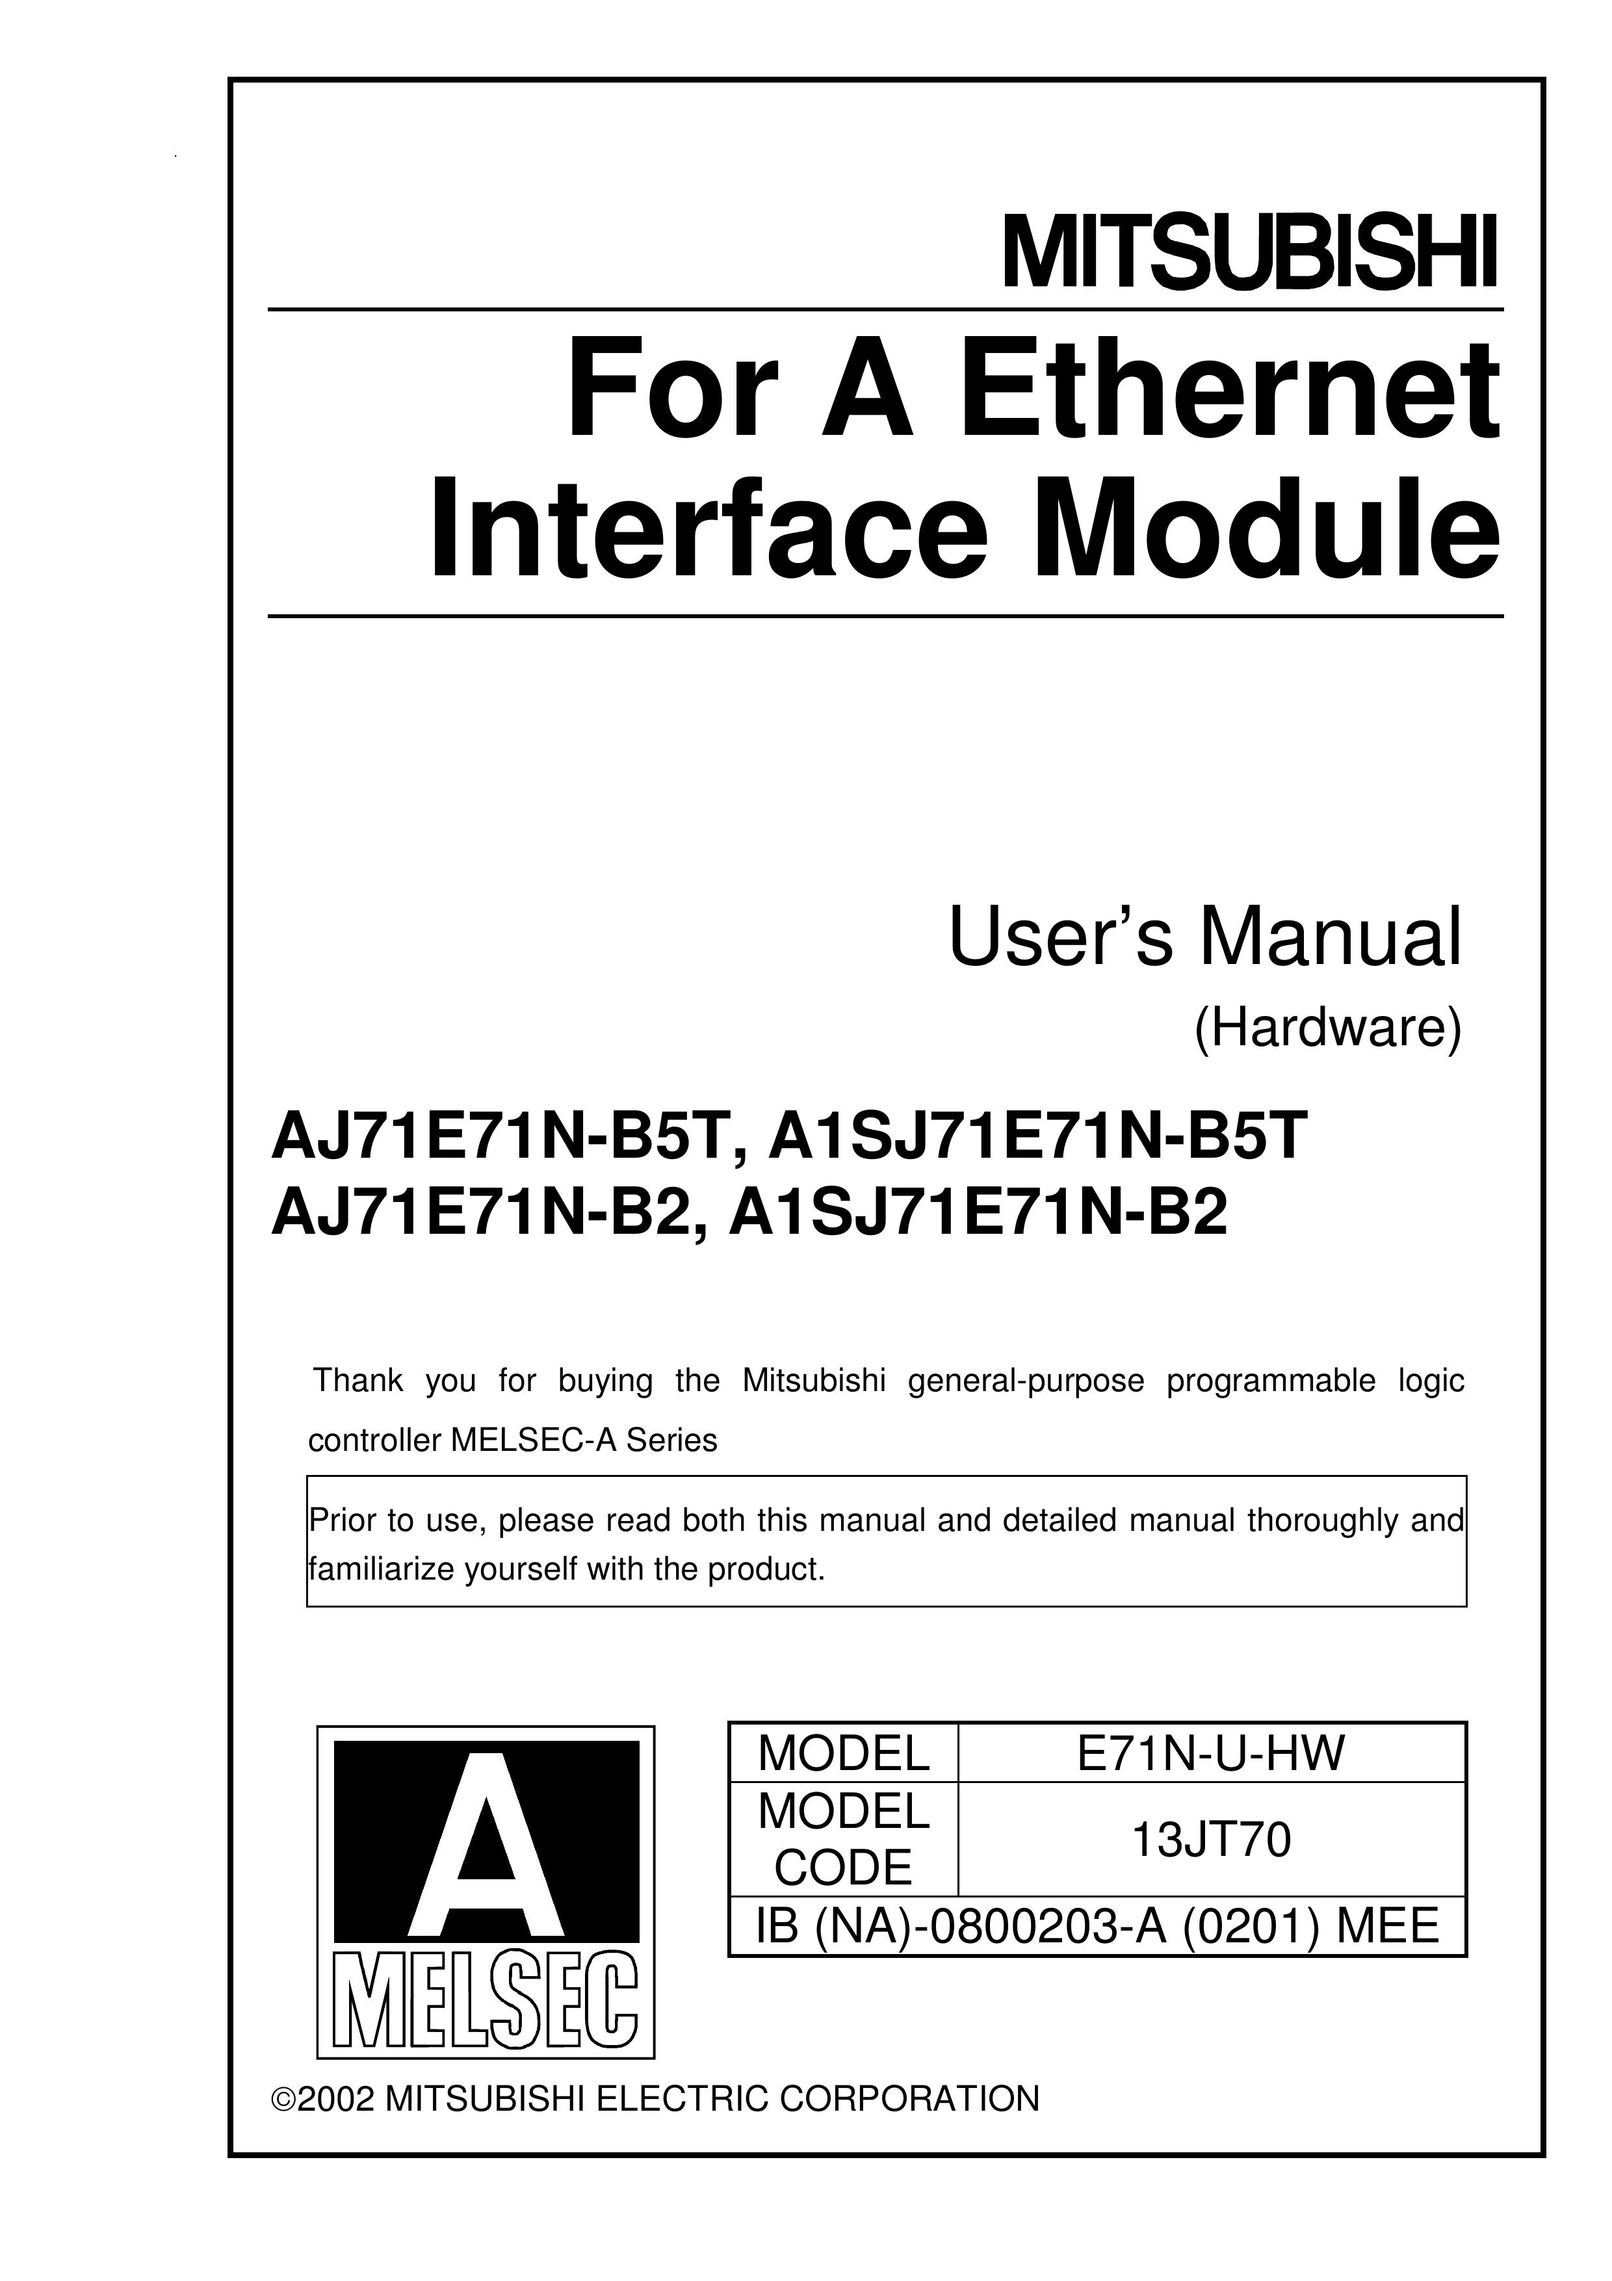 Mitsubishi AJ71E71N-B2 Network Card User Manual